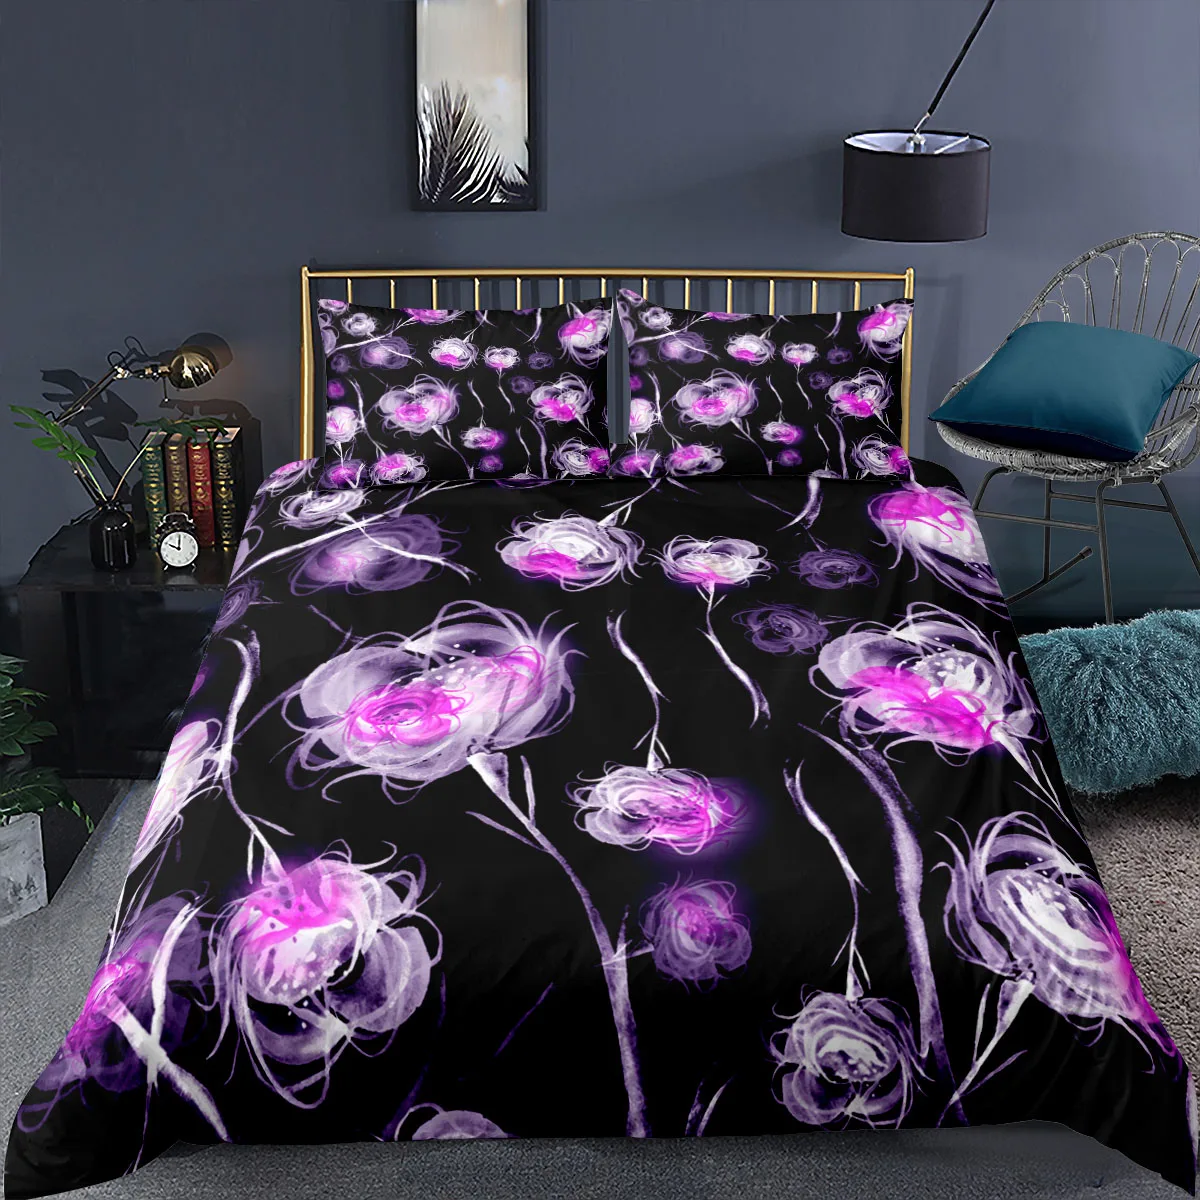 

Purple Flower Bedding Set Fantasy Modern Black 3d Duvet Cover Sets Comforter Bed Linen Twin Queen King Single Size Gift Fashion